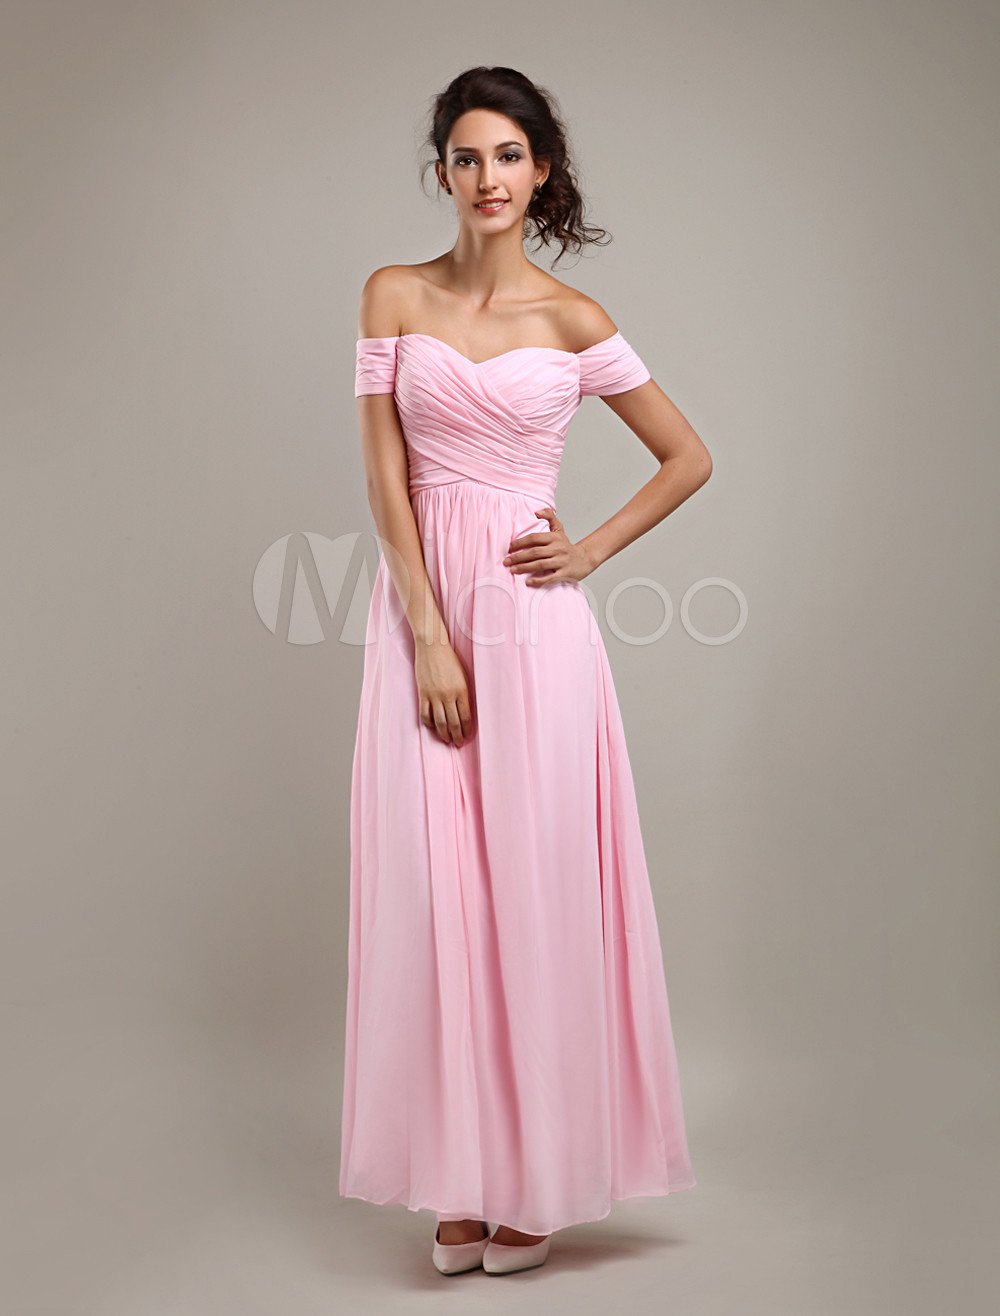 Glamorous Pink Chiffon A-line Maxi Bridesmaid Dress (Wedding Bridesmaid Dresses) photo